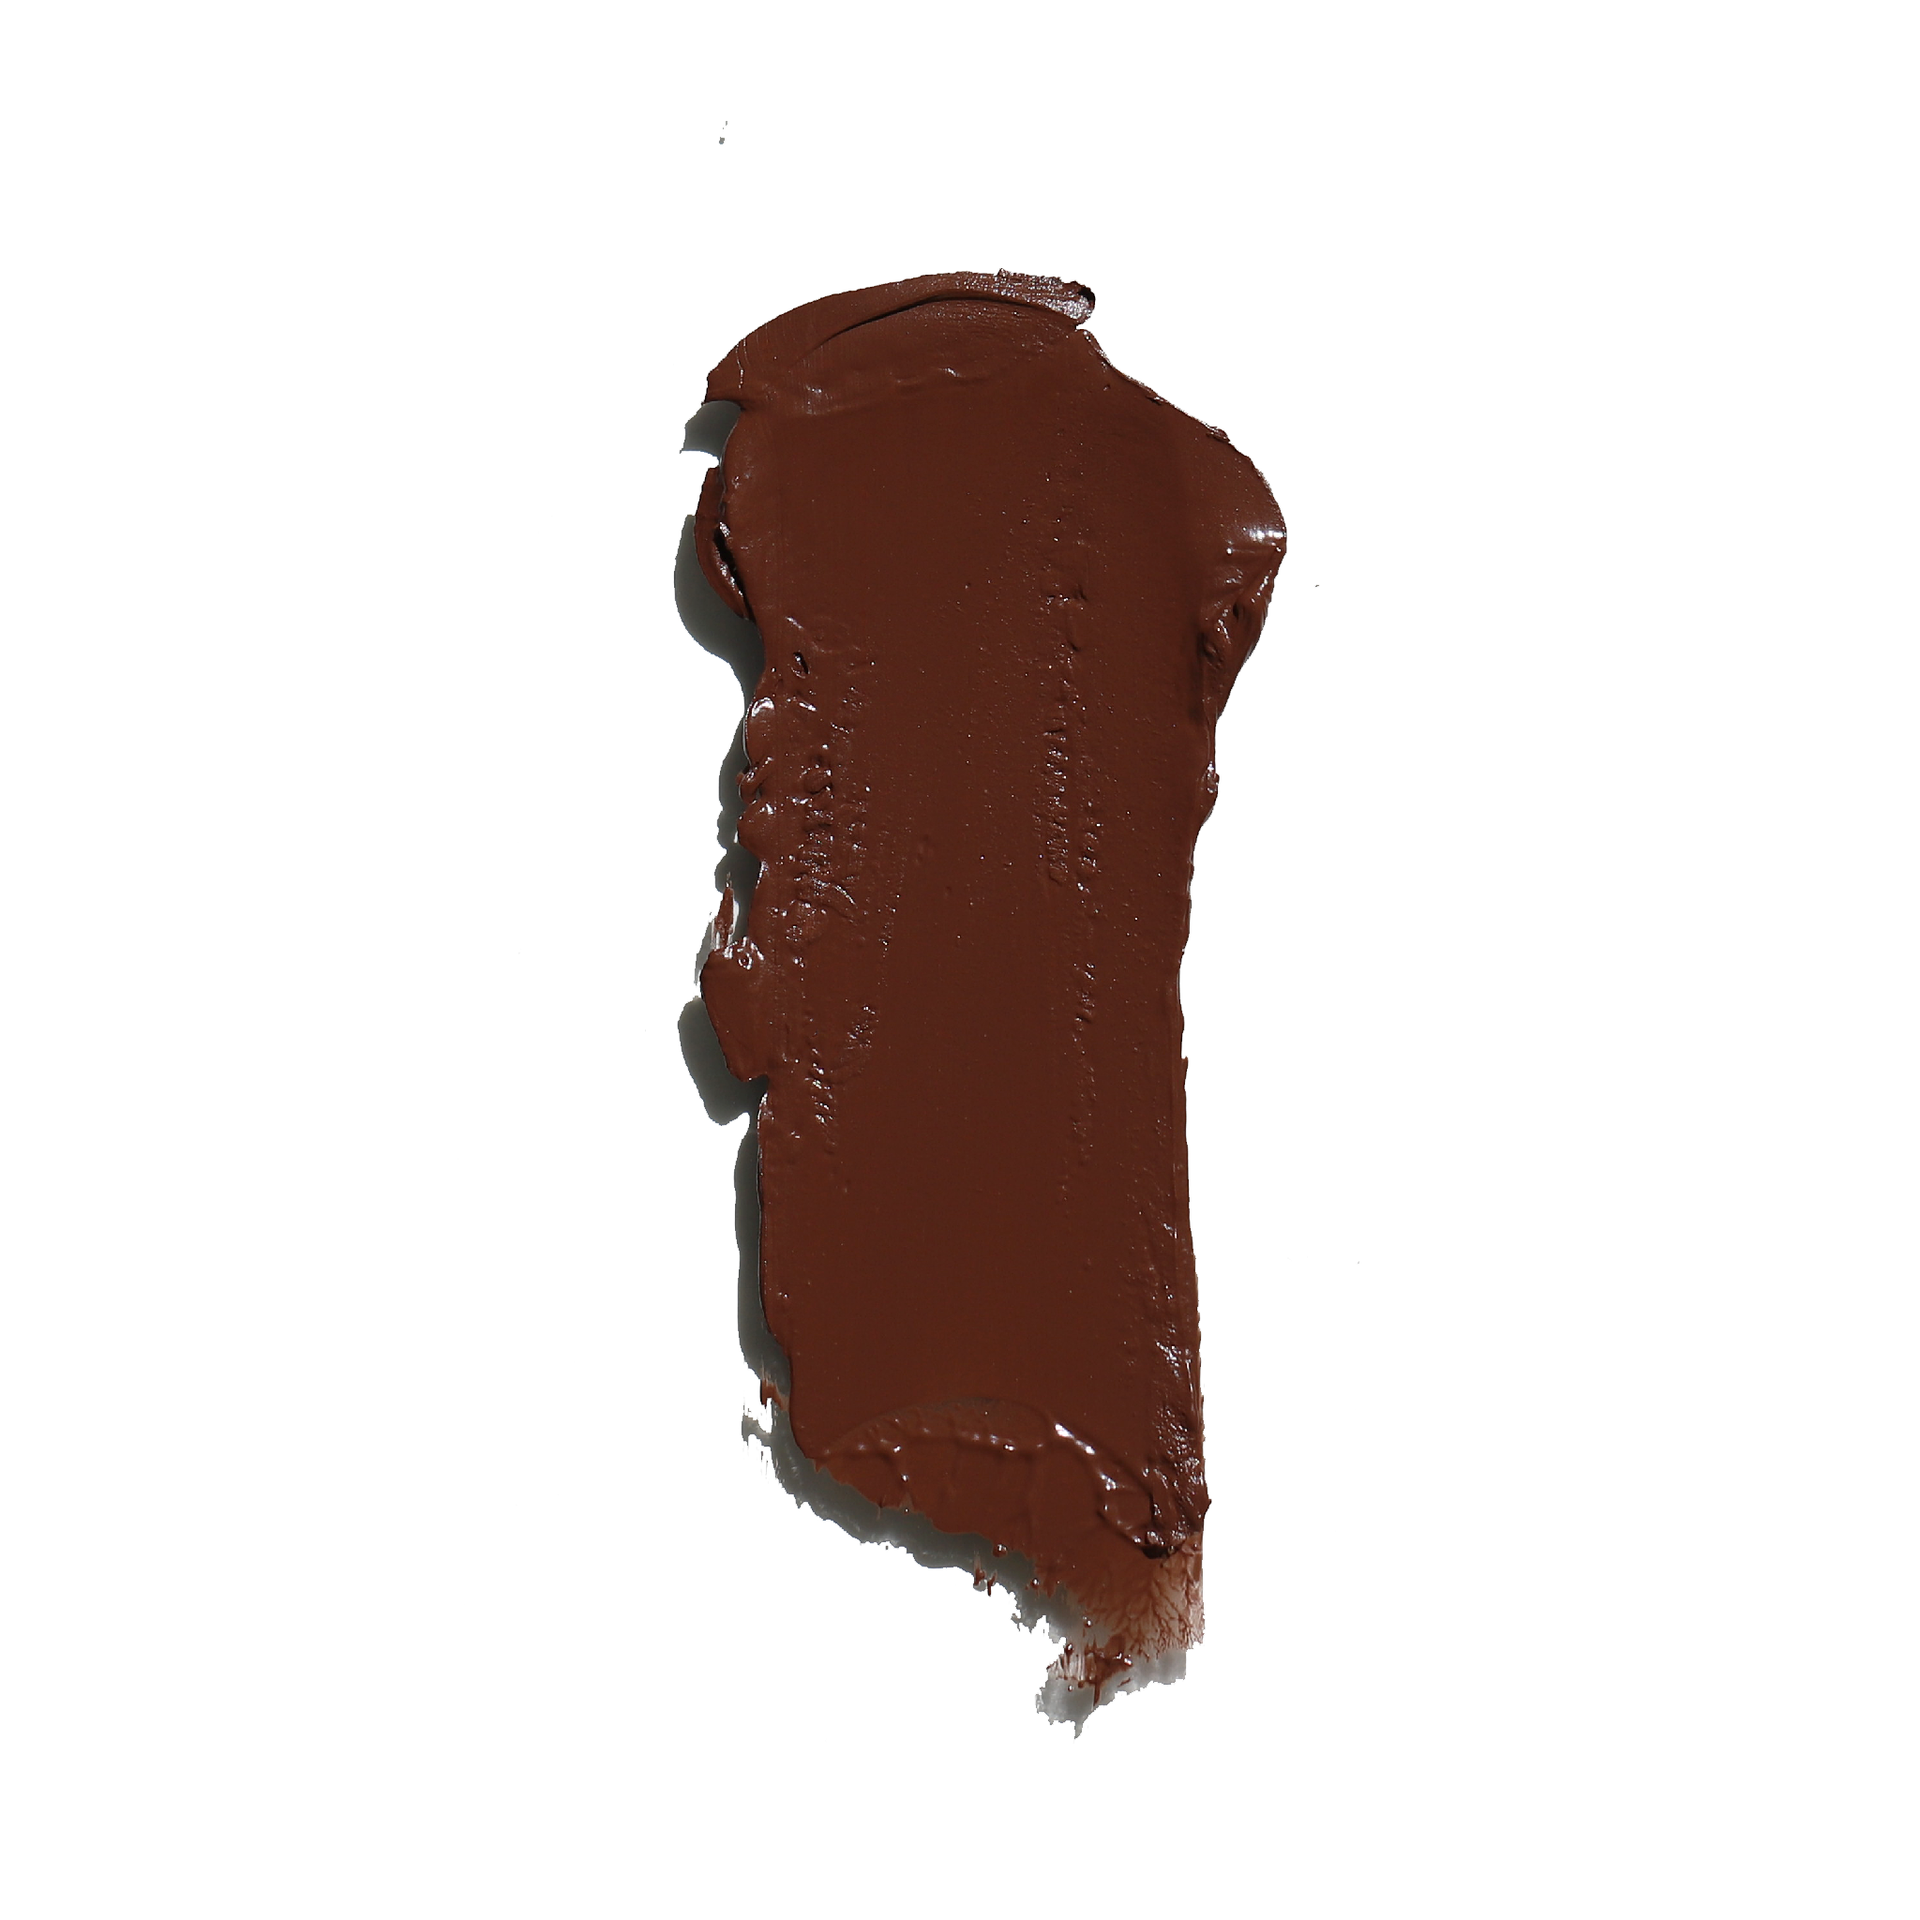 swatch of bronzer- candy paint cream bronzer - half caked makeup 